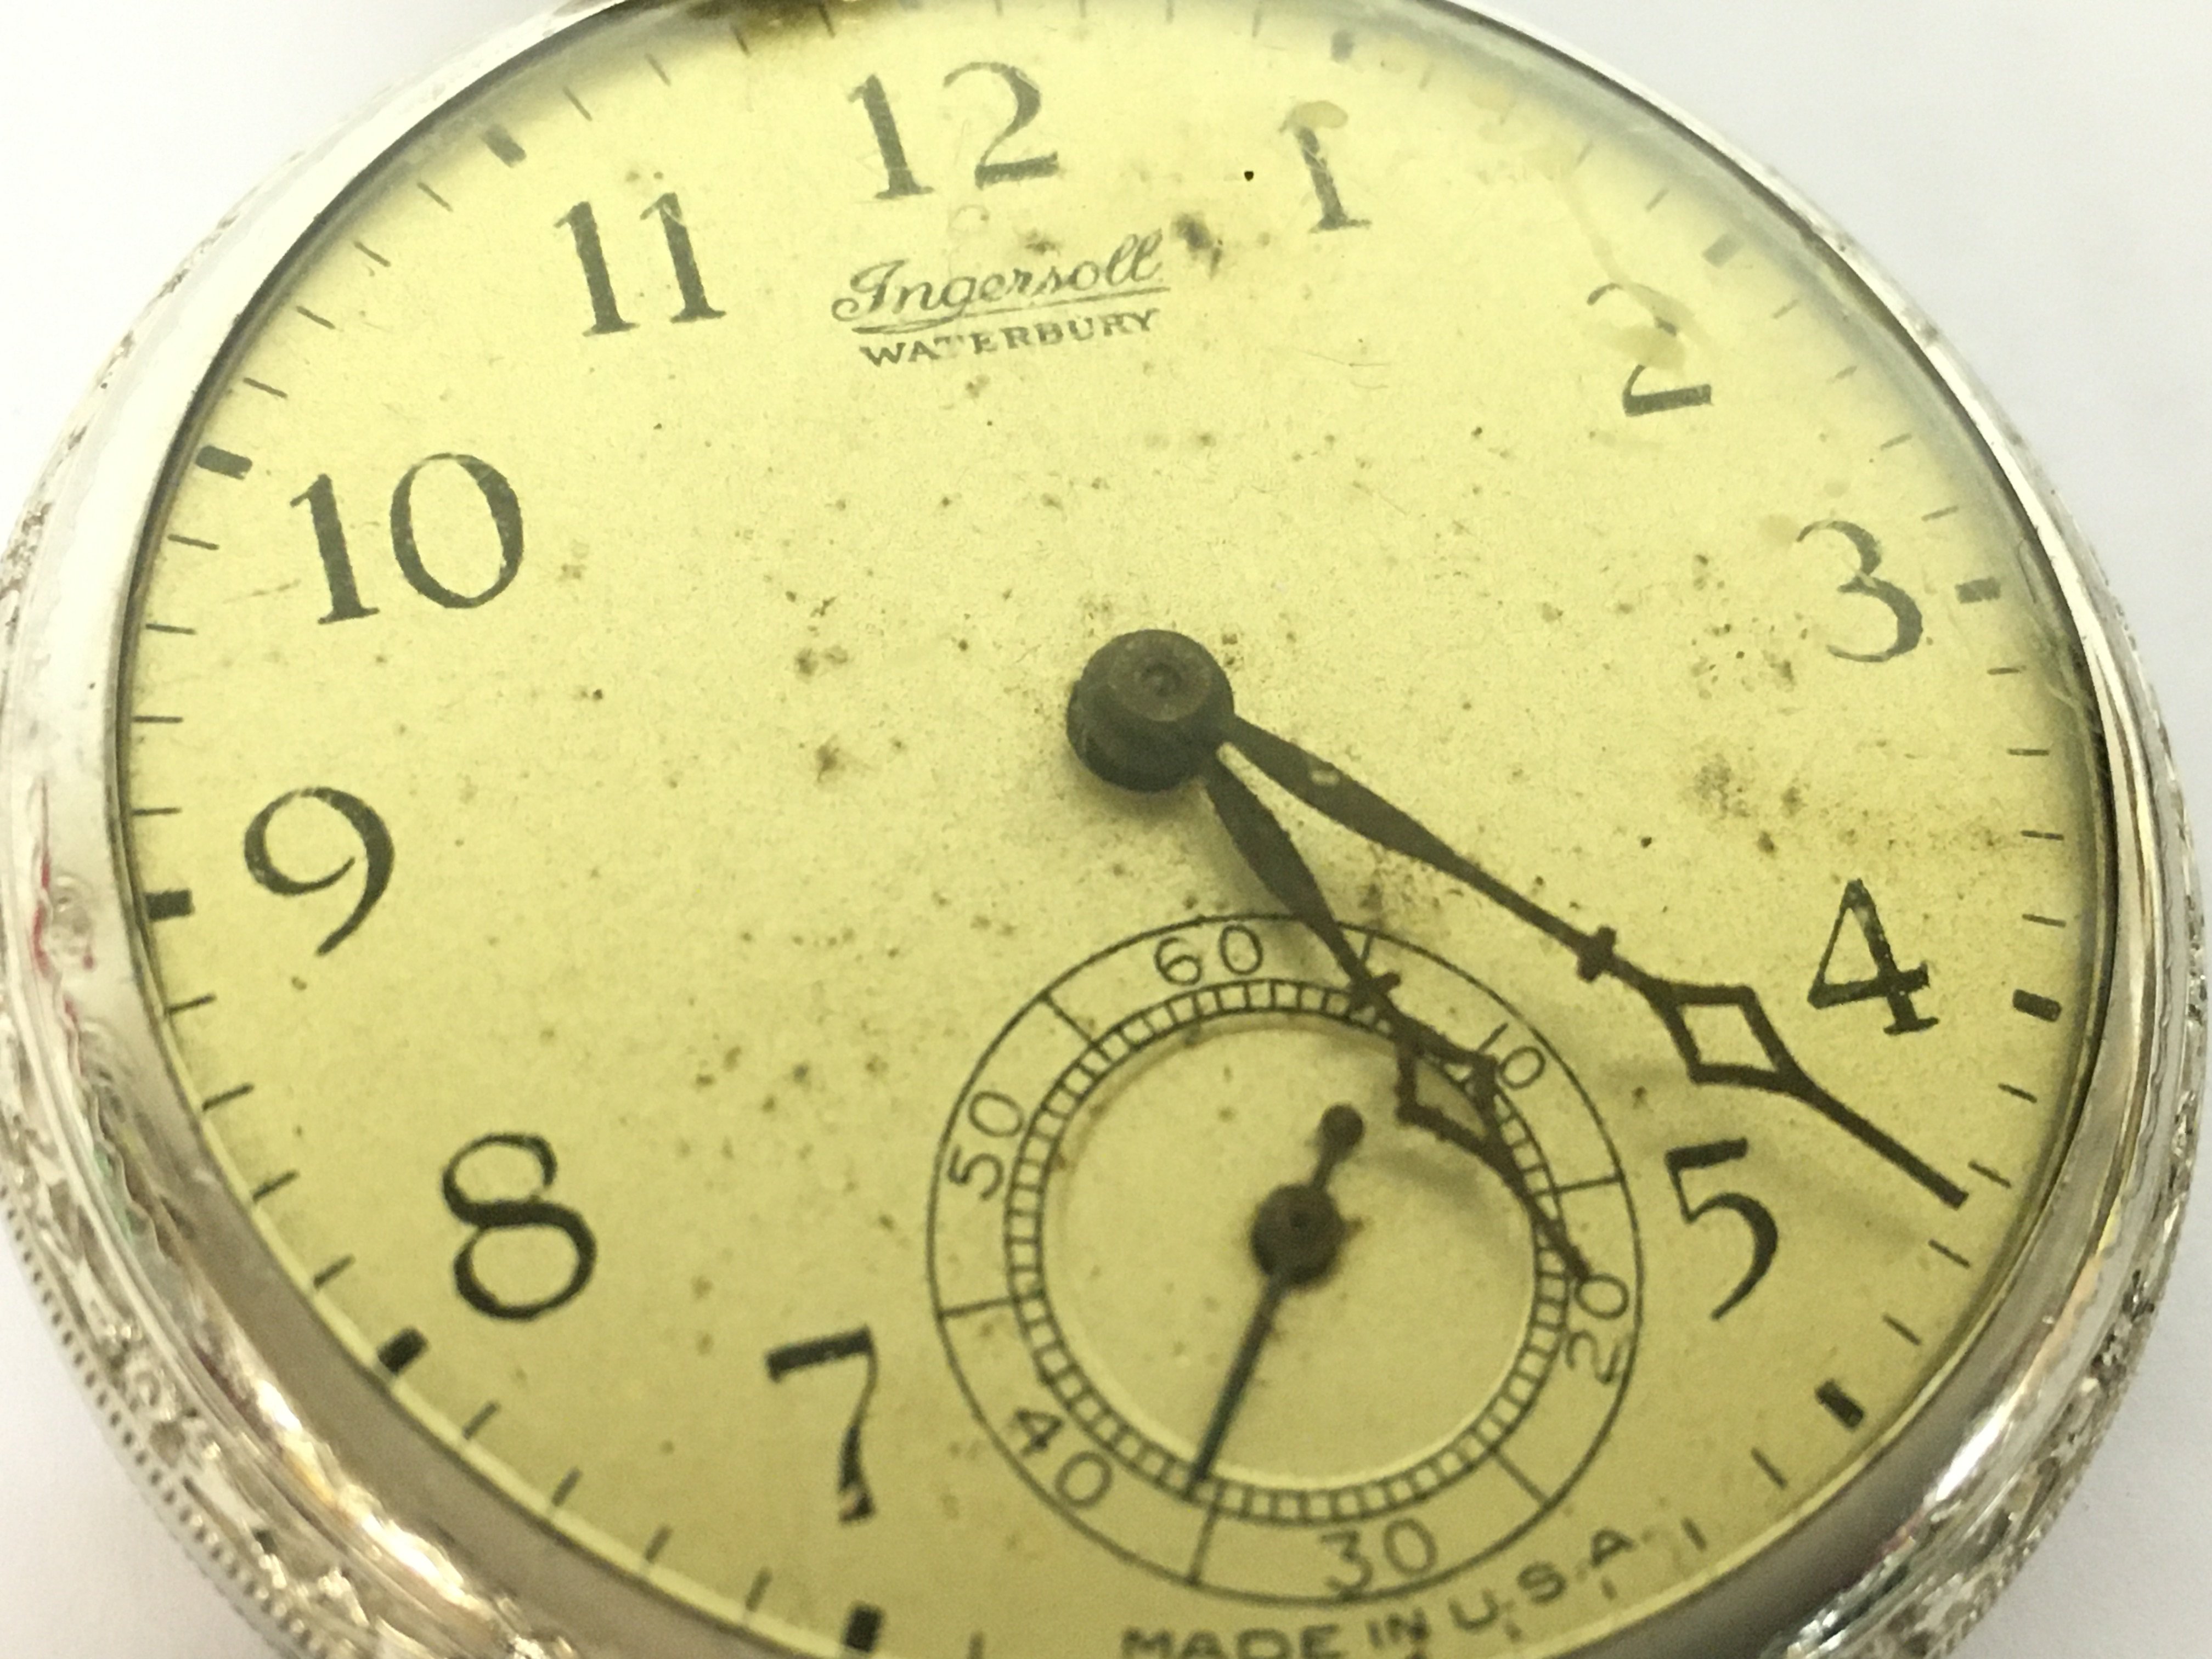 A button wind Ingersoll Waterbury pocket watch wit - Image 2 of 3